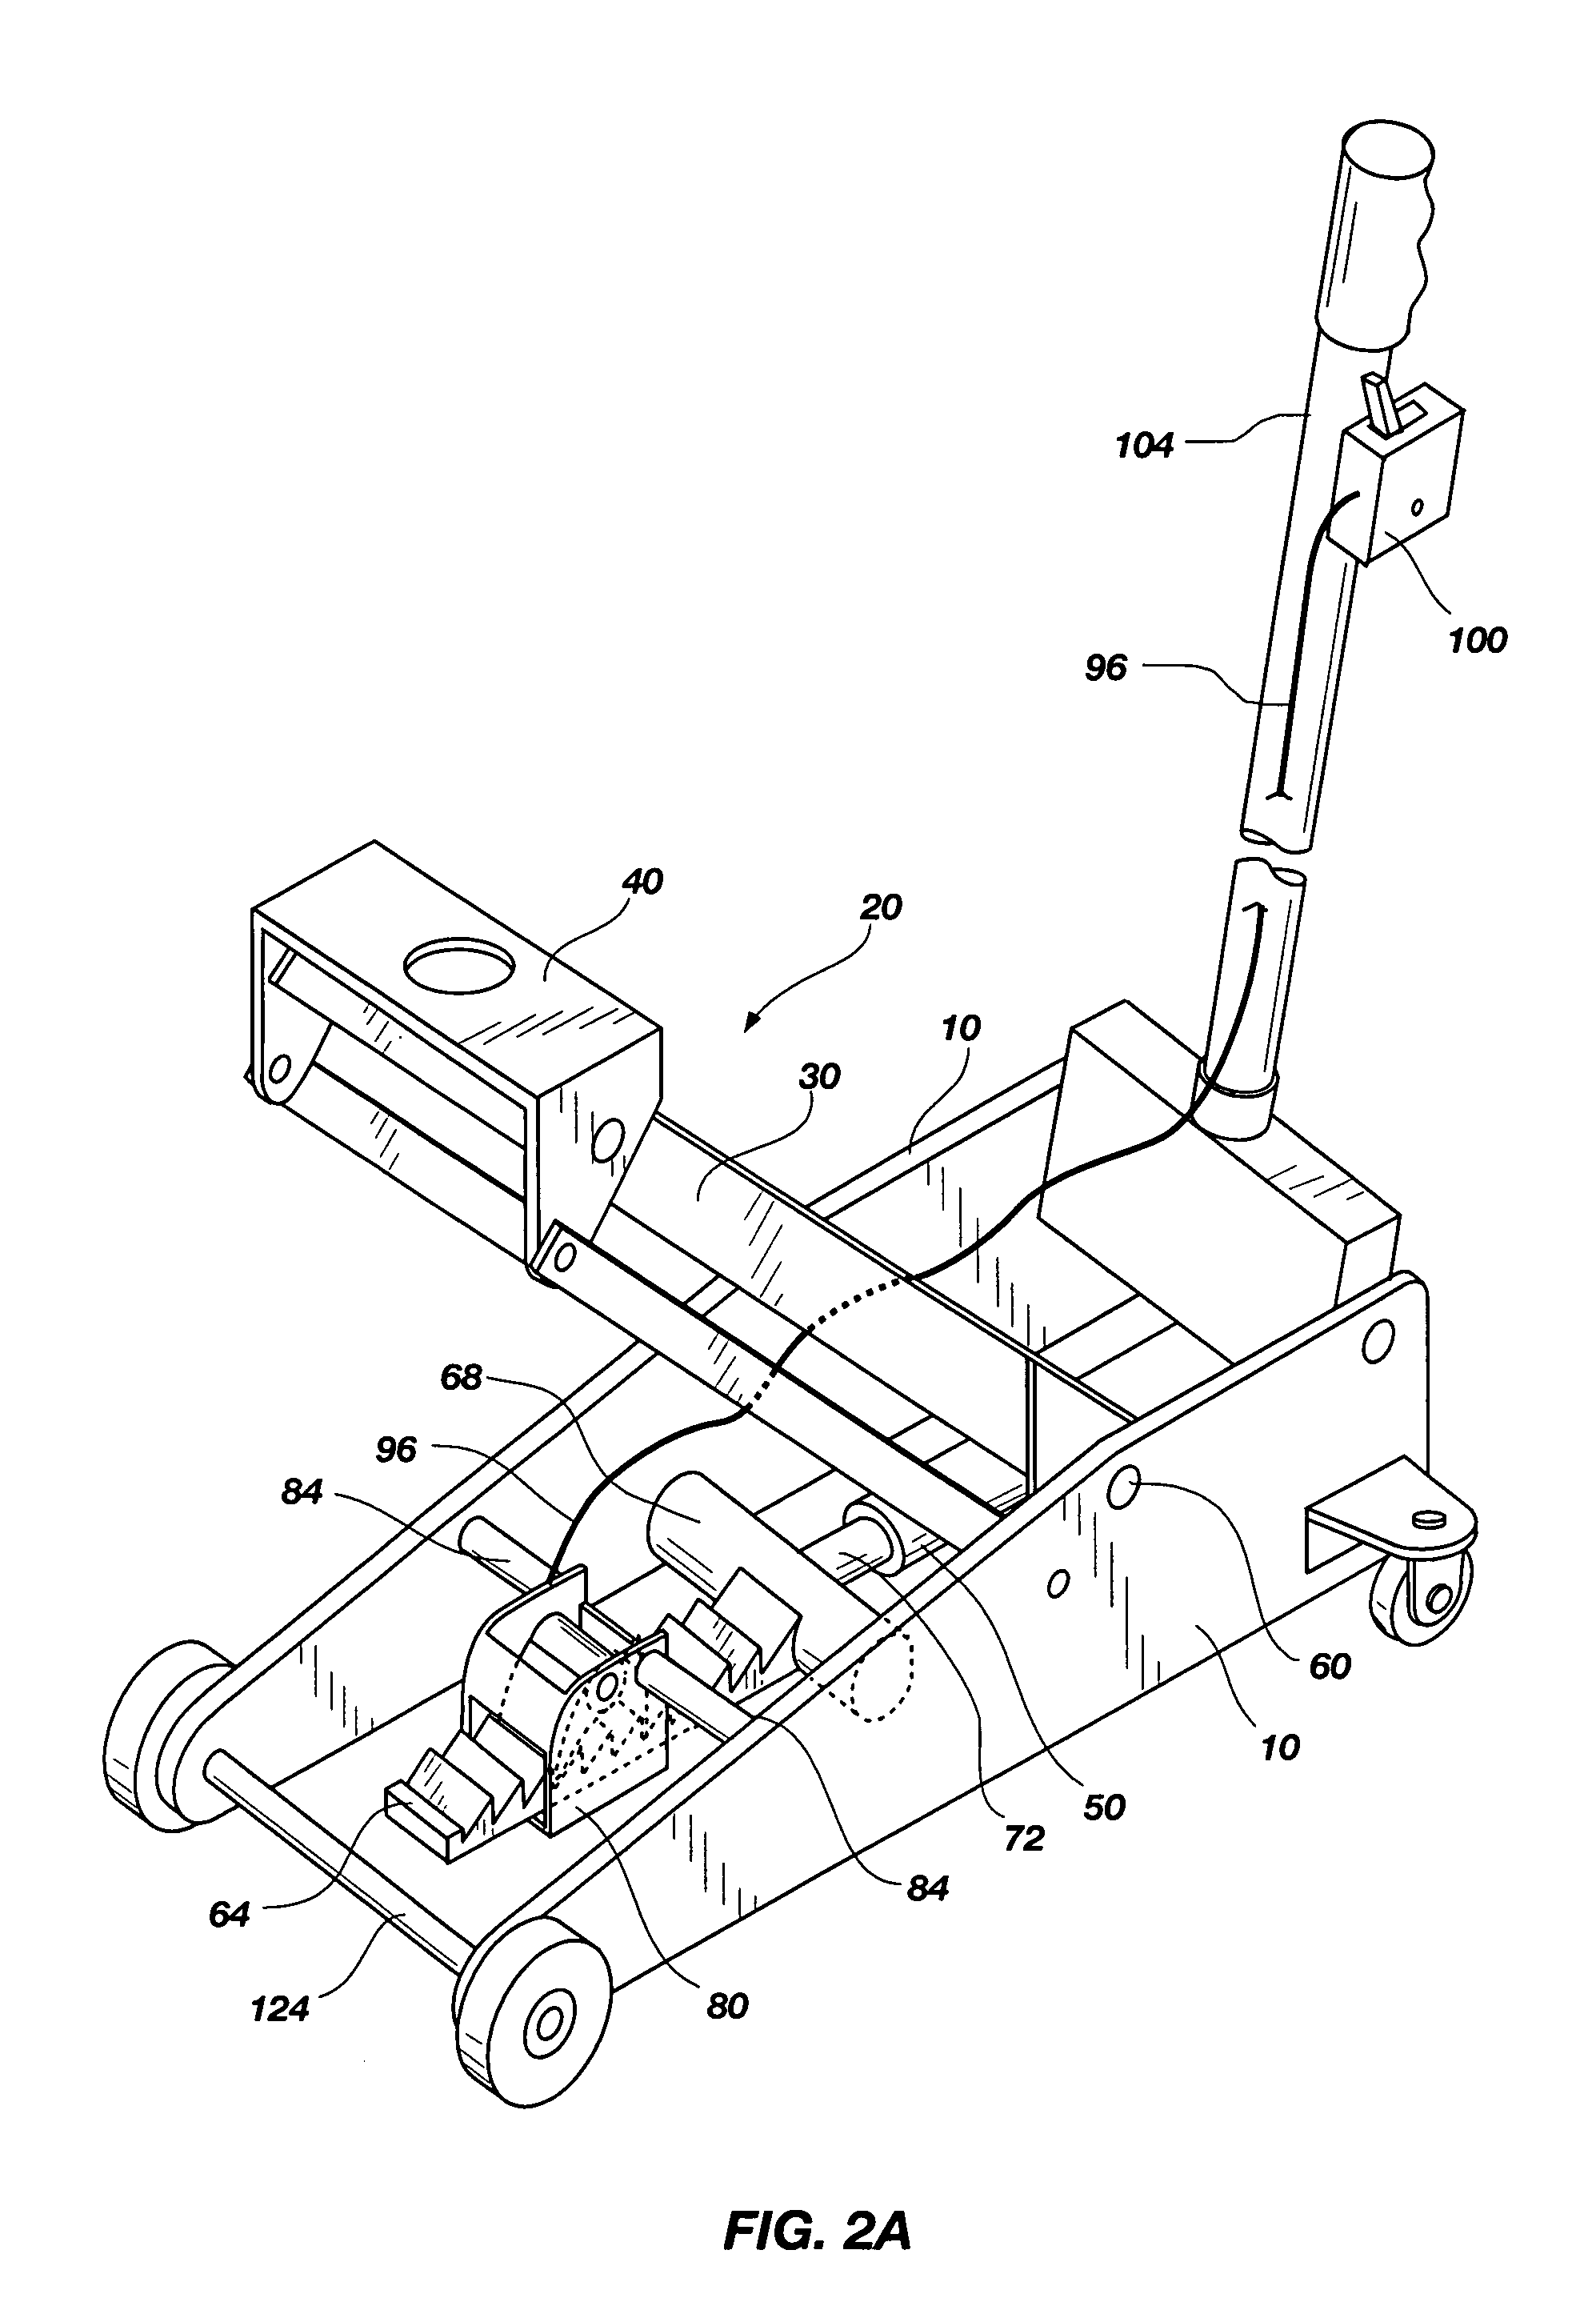 Hydraulic Jack with locking mechanism